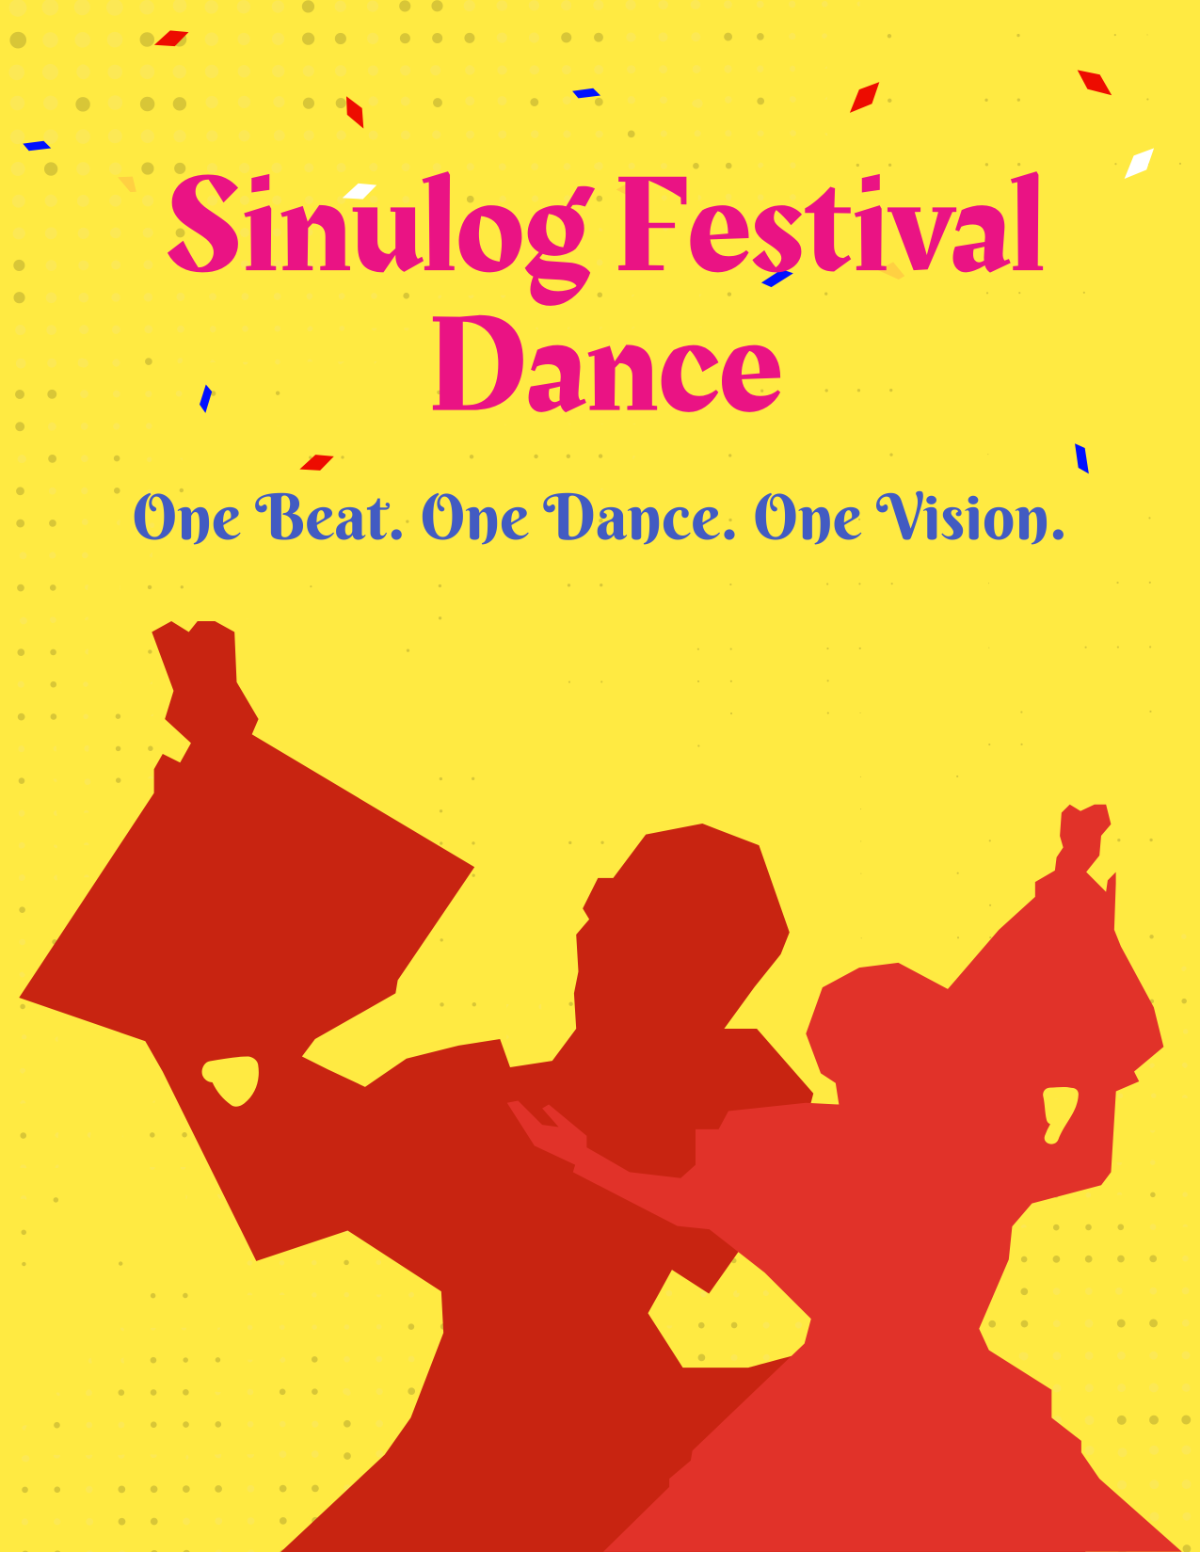 Sinulog Festival Dance Flyer